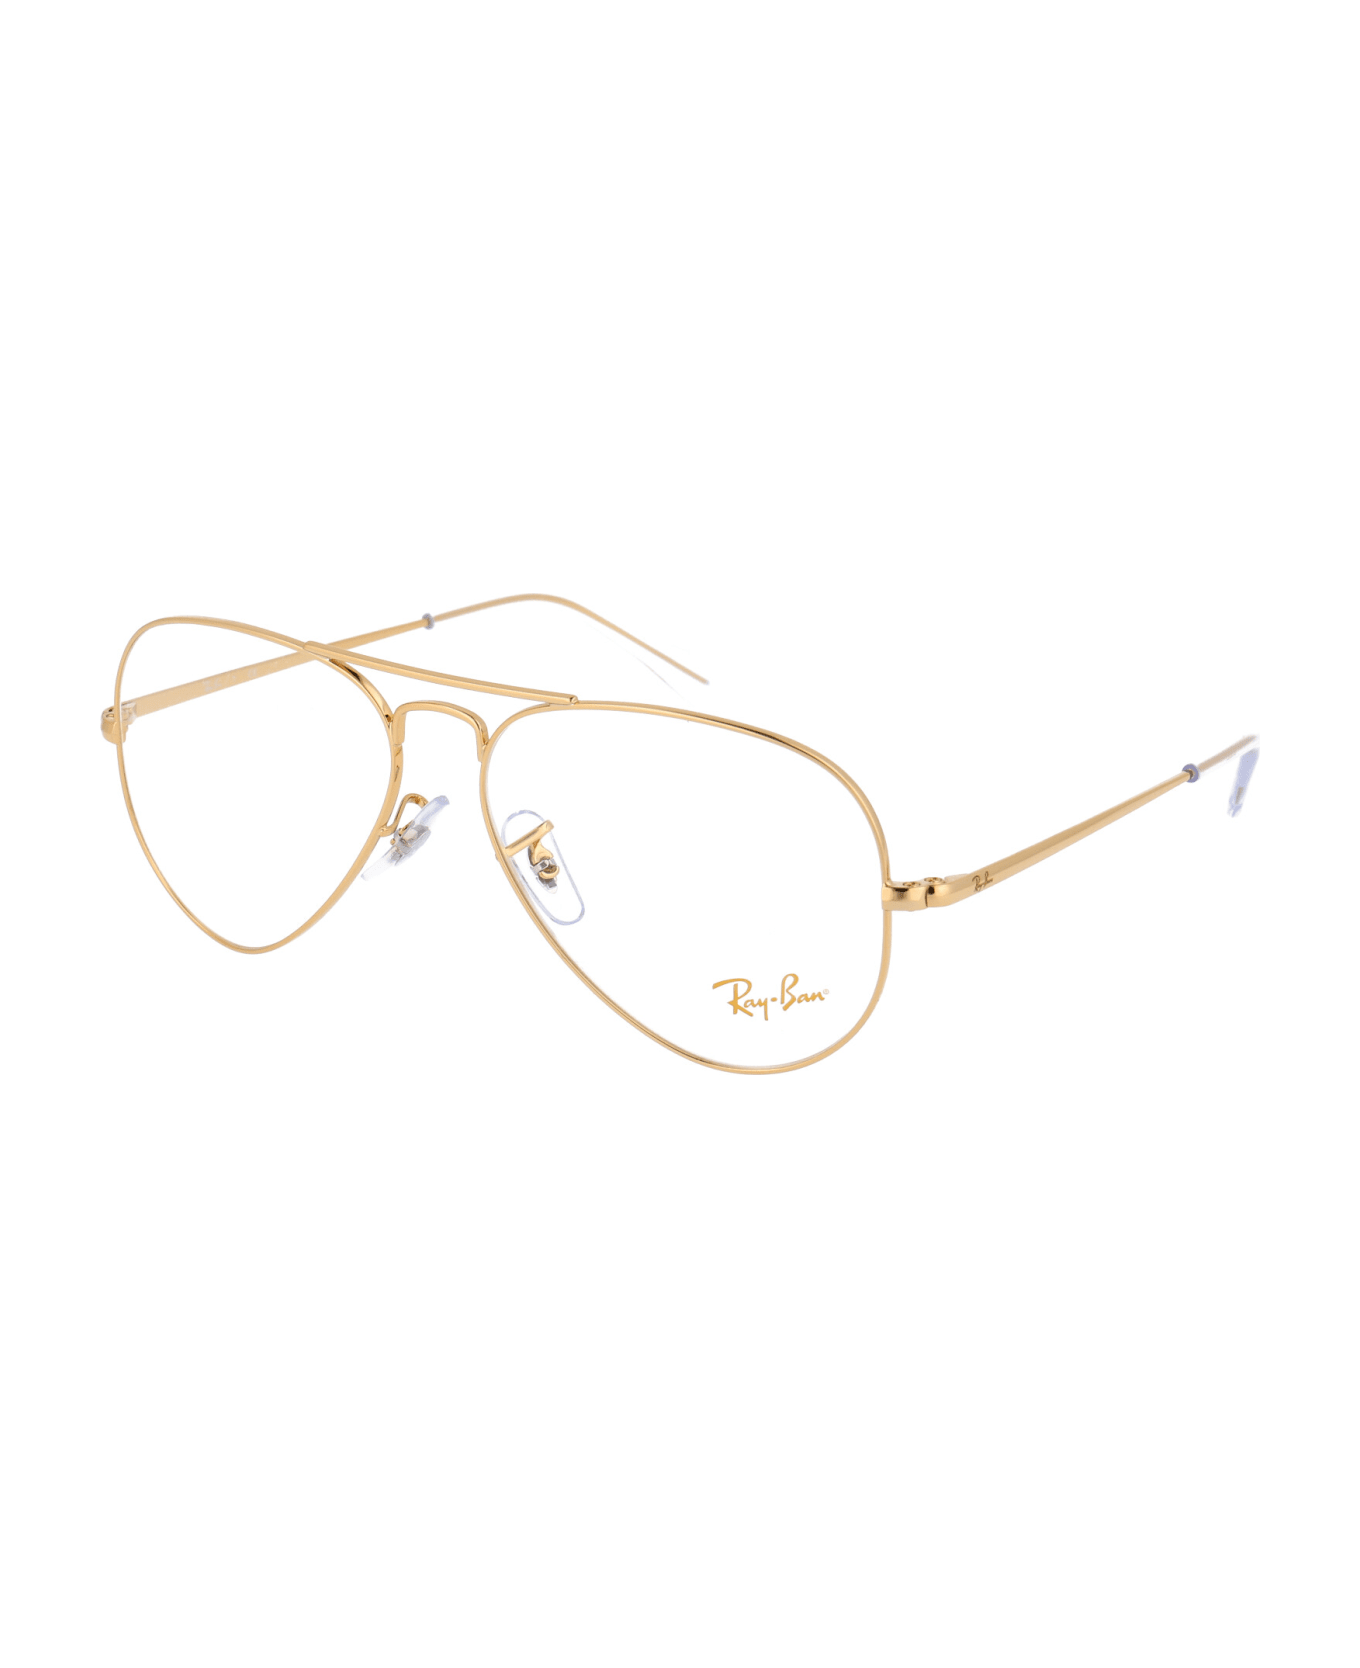 Ray-Ban Aviator Glasses - 3086 Gold